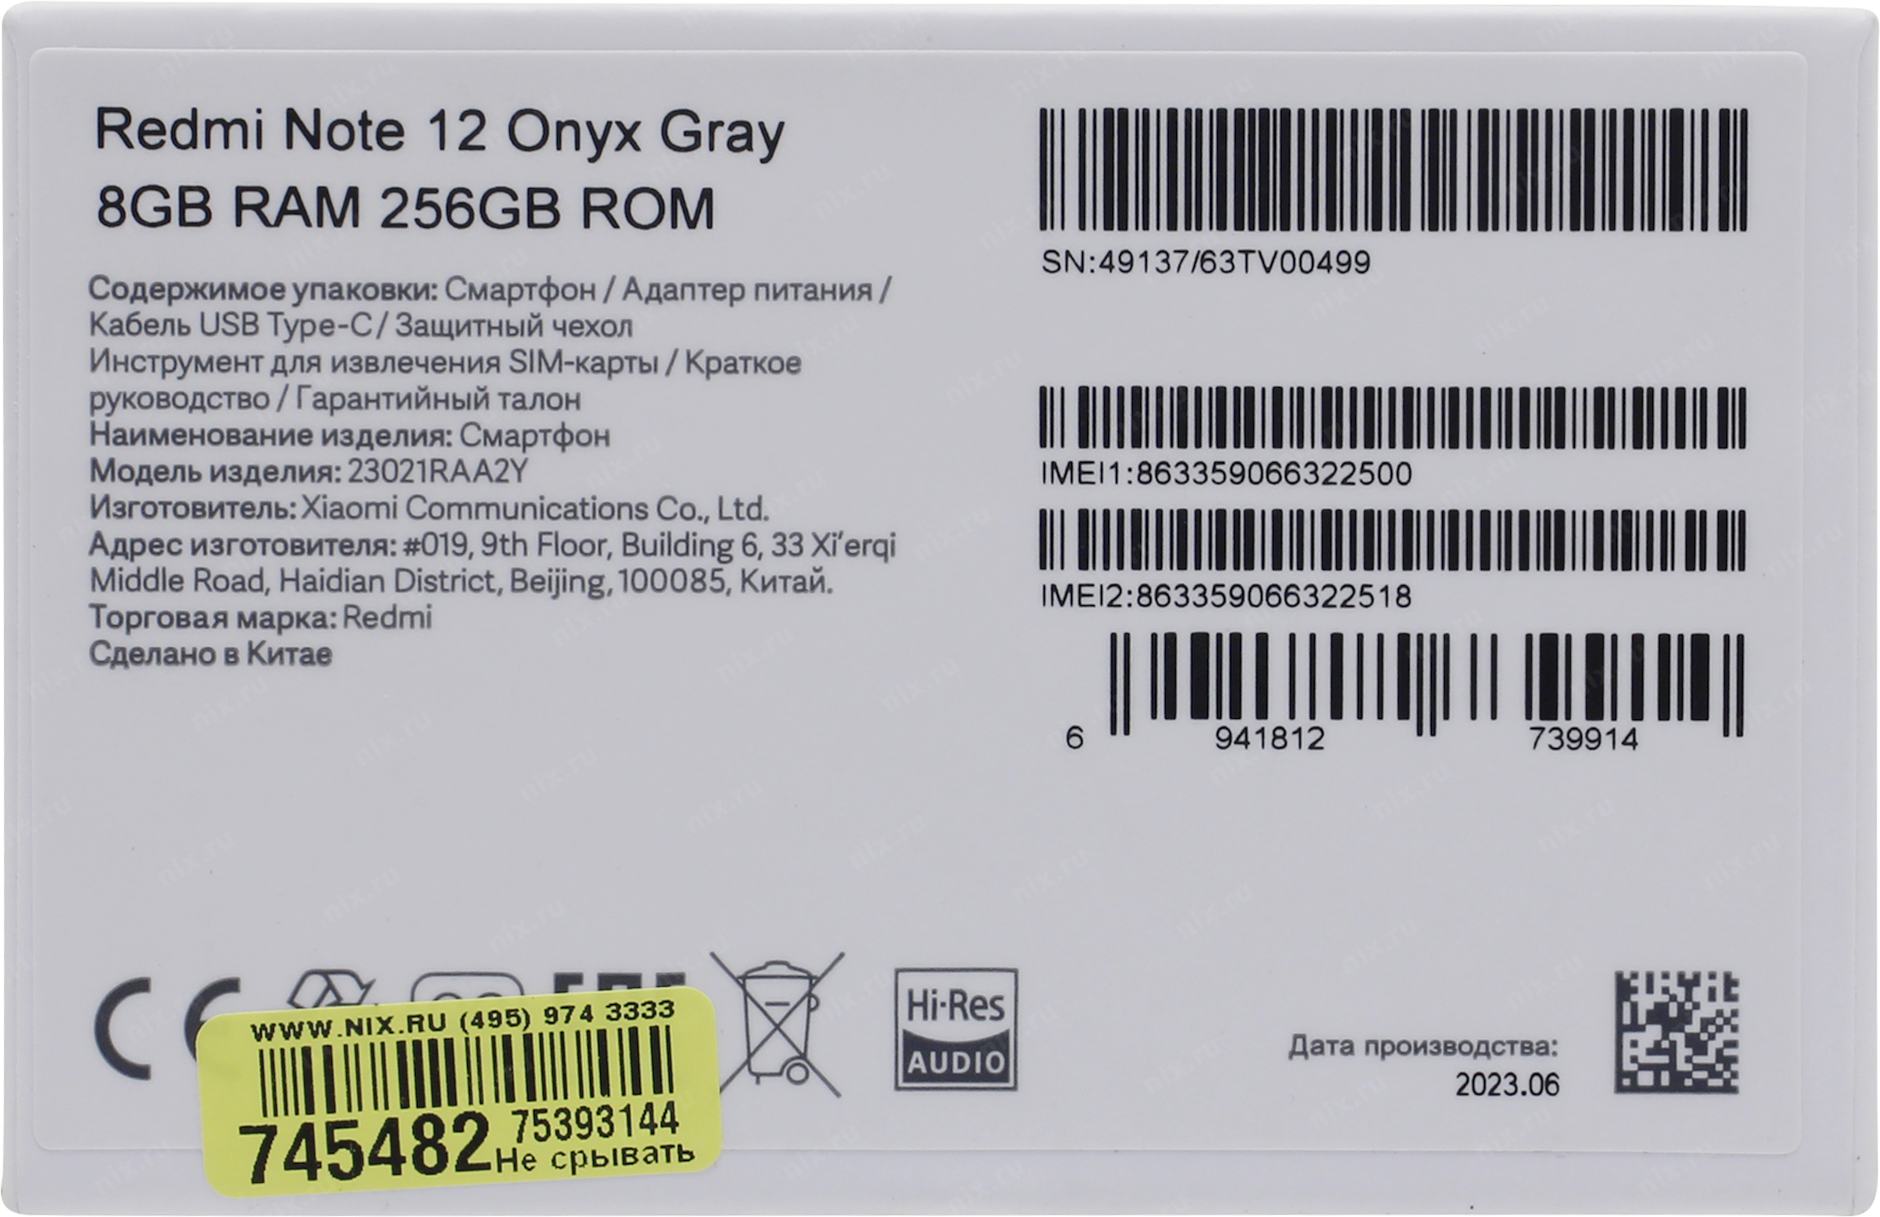 Redmi note 12 onyx gray 256gb